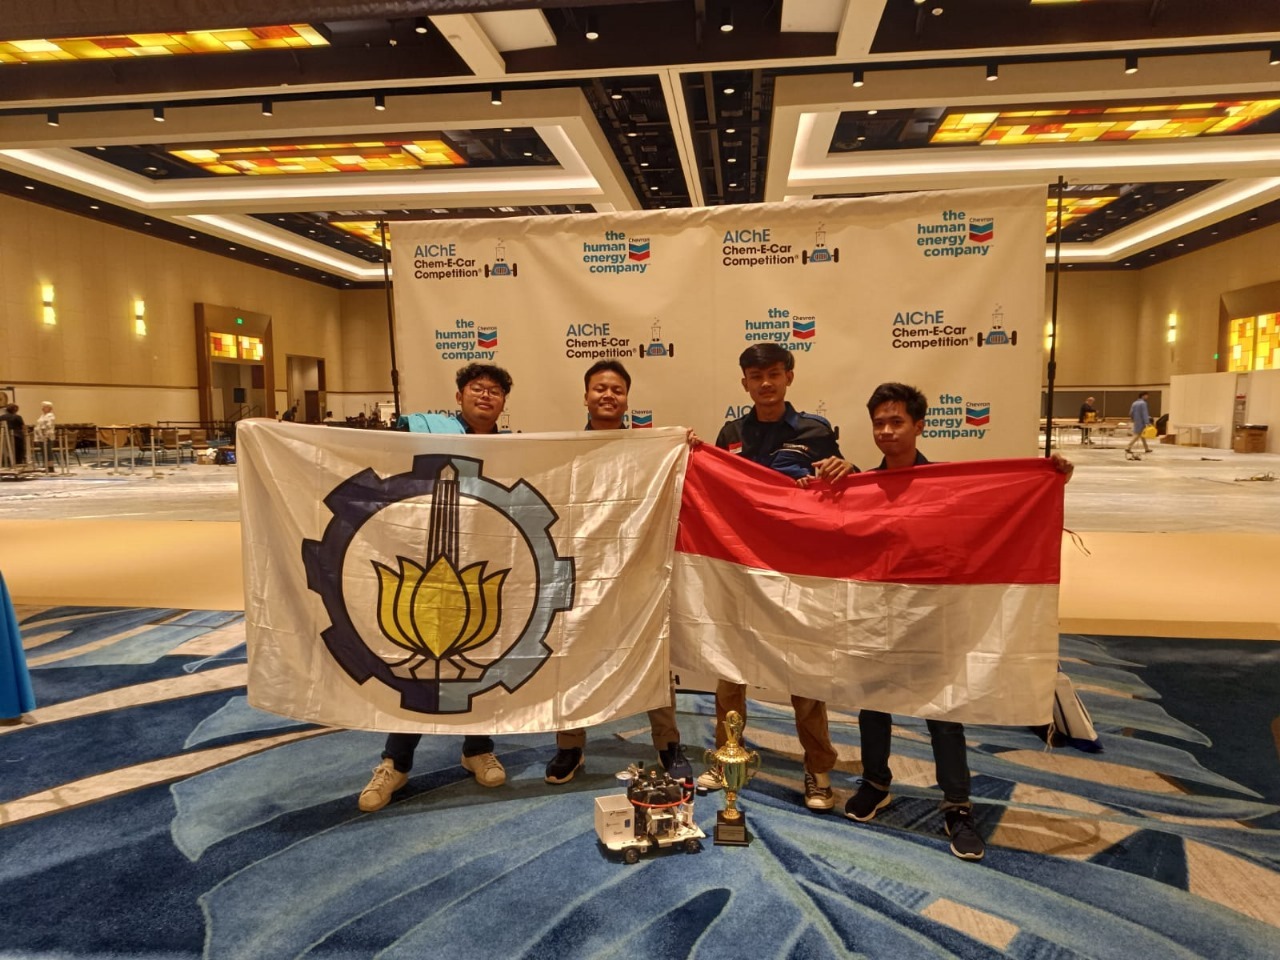 The IDS Spectronics team represented by (from left) Bimo Pindang Auliya, Diyas Binda Prayoga, VG Dharma Aditya, Ahmad Fadjar Maulana Firdaus won 2nd place in USA.